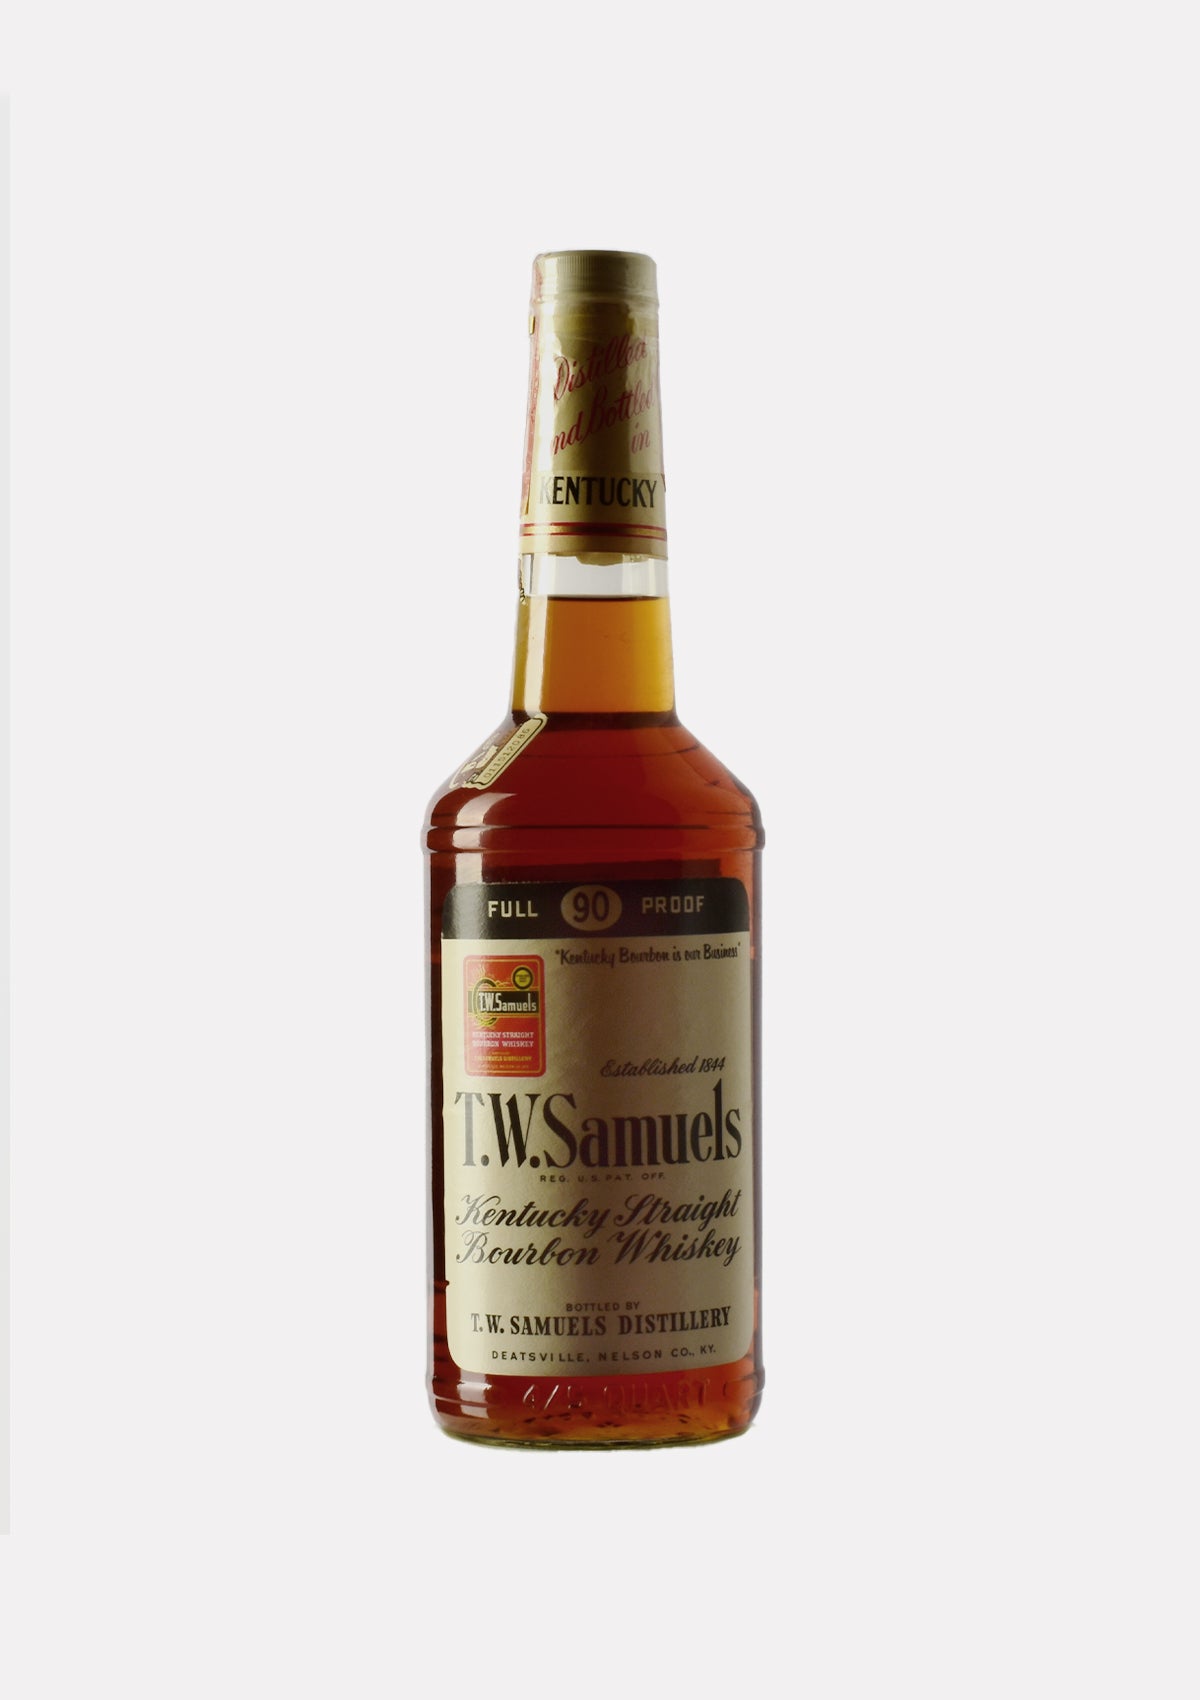 T.W. Samuels Kentucky Straight Bourbon Whiskey